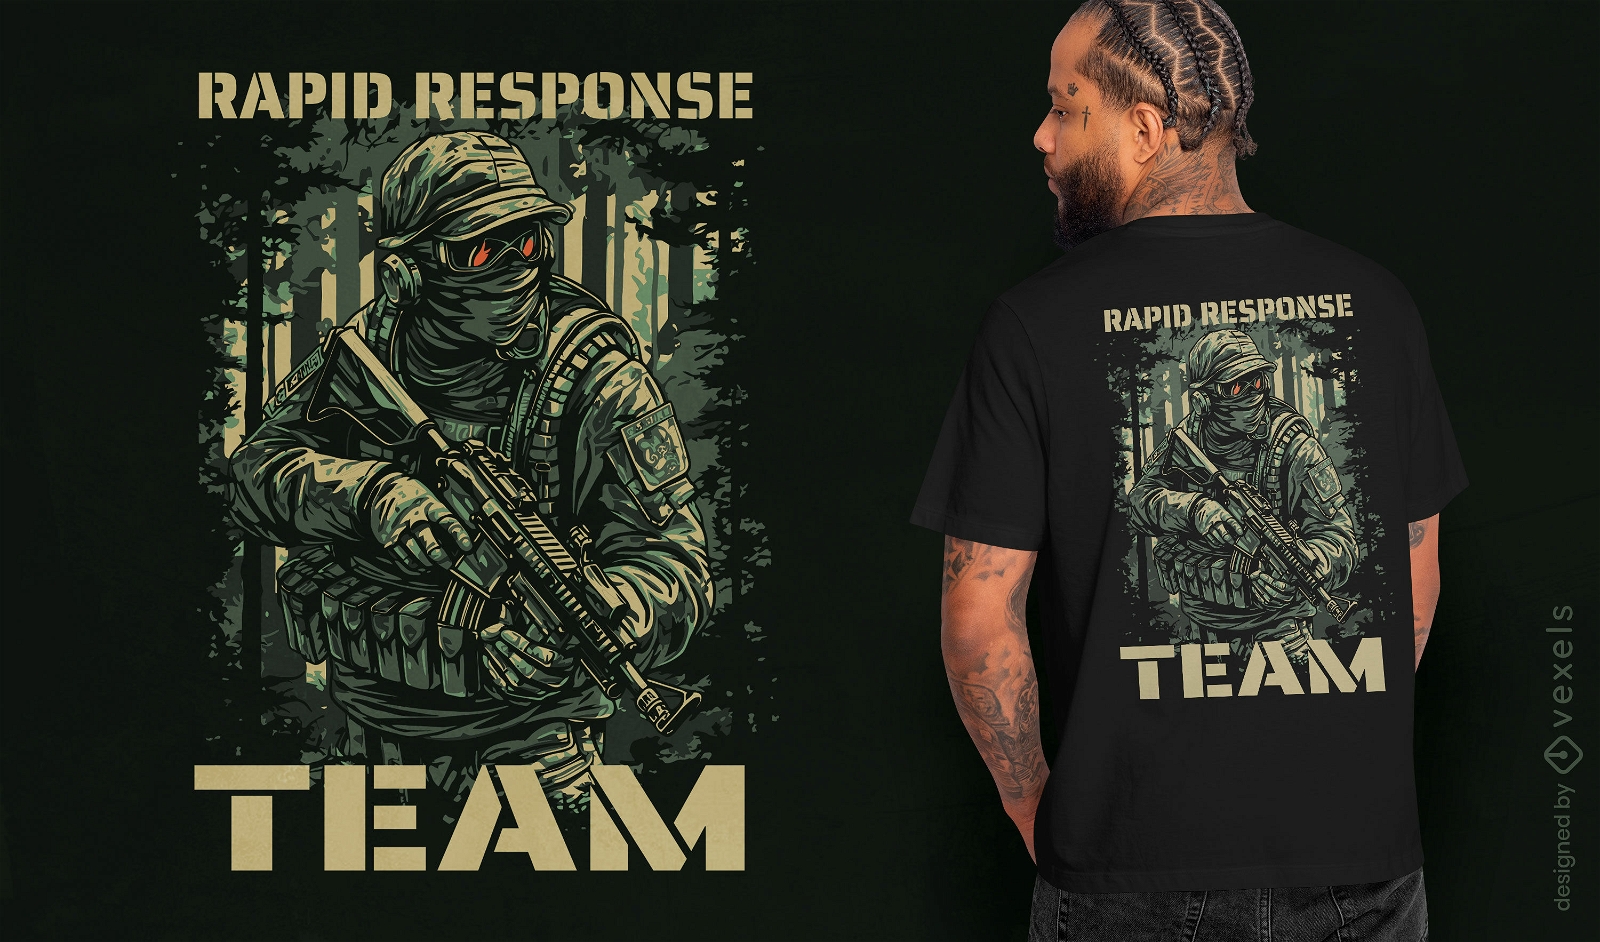 Rapid response team soldier t-shirt design